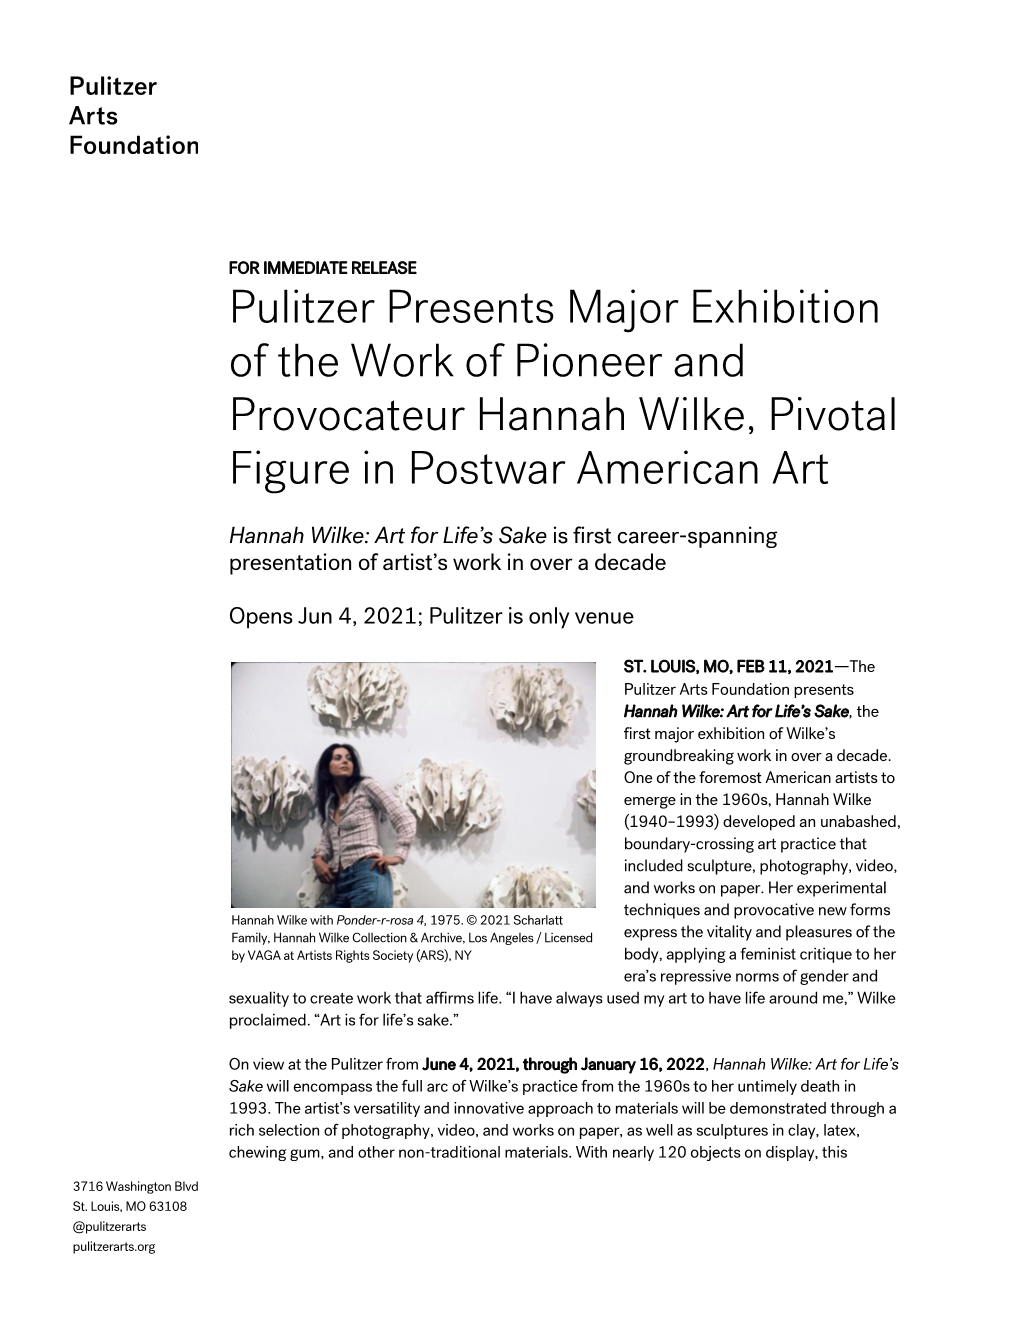 Pulitzer Presents Major Exhibition of the Work of Pioneer and Provocateur Hannah Wilke, Pivotal Figure in Postwar American Art